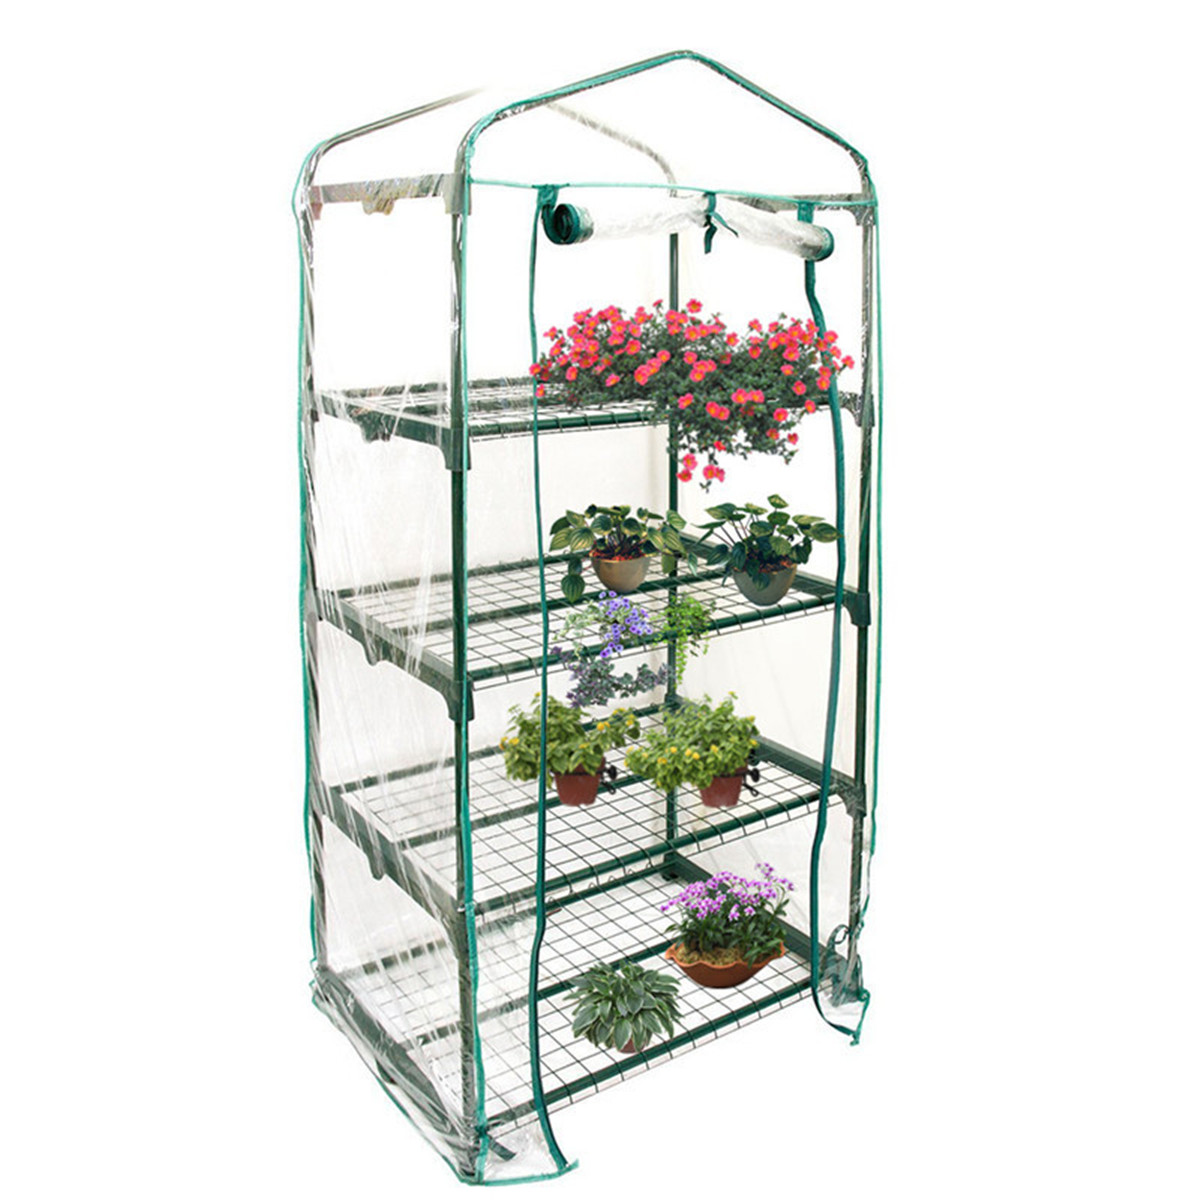 

69×49×160cm Garden Green House Mini Portable Outdoor Warm Greenhouse Cover Flower Plants Gardening